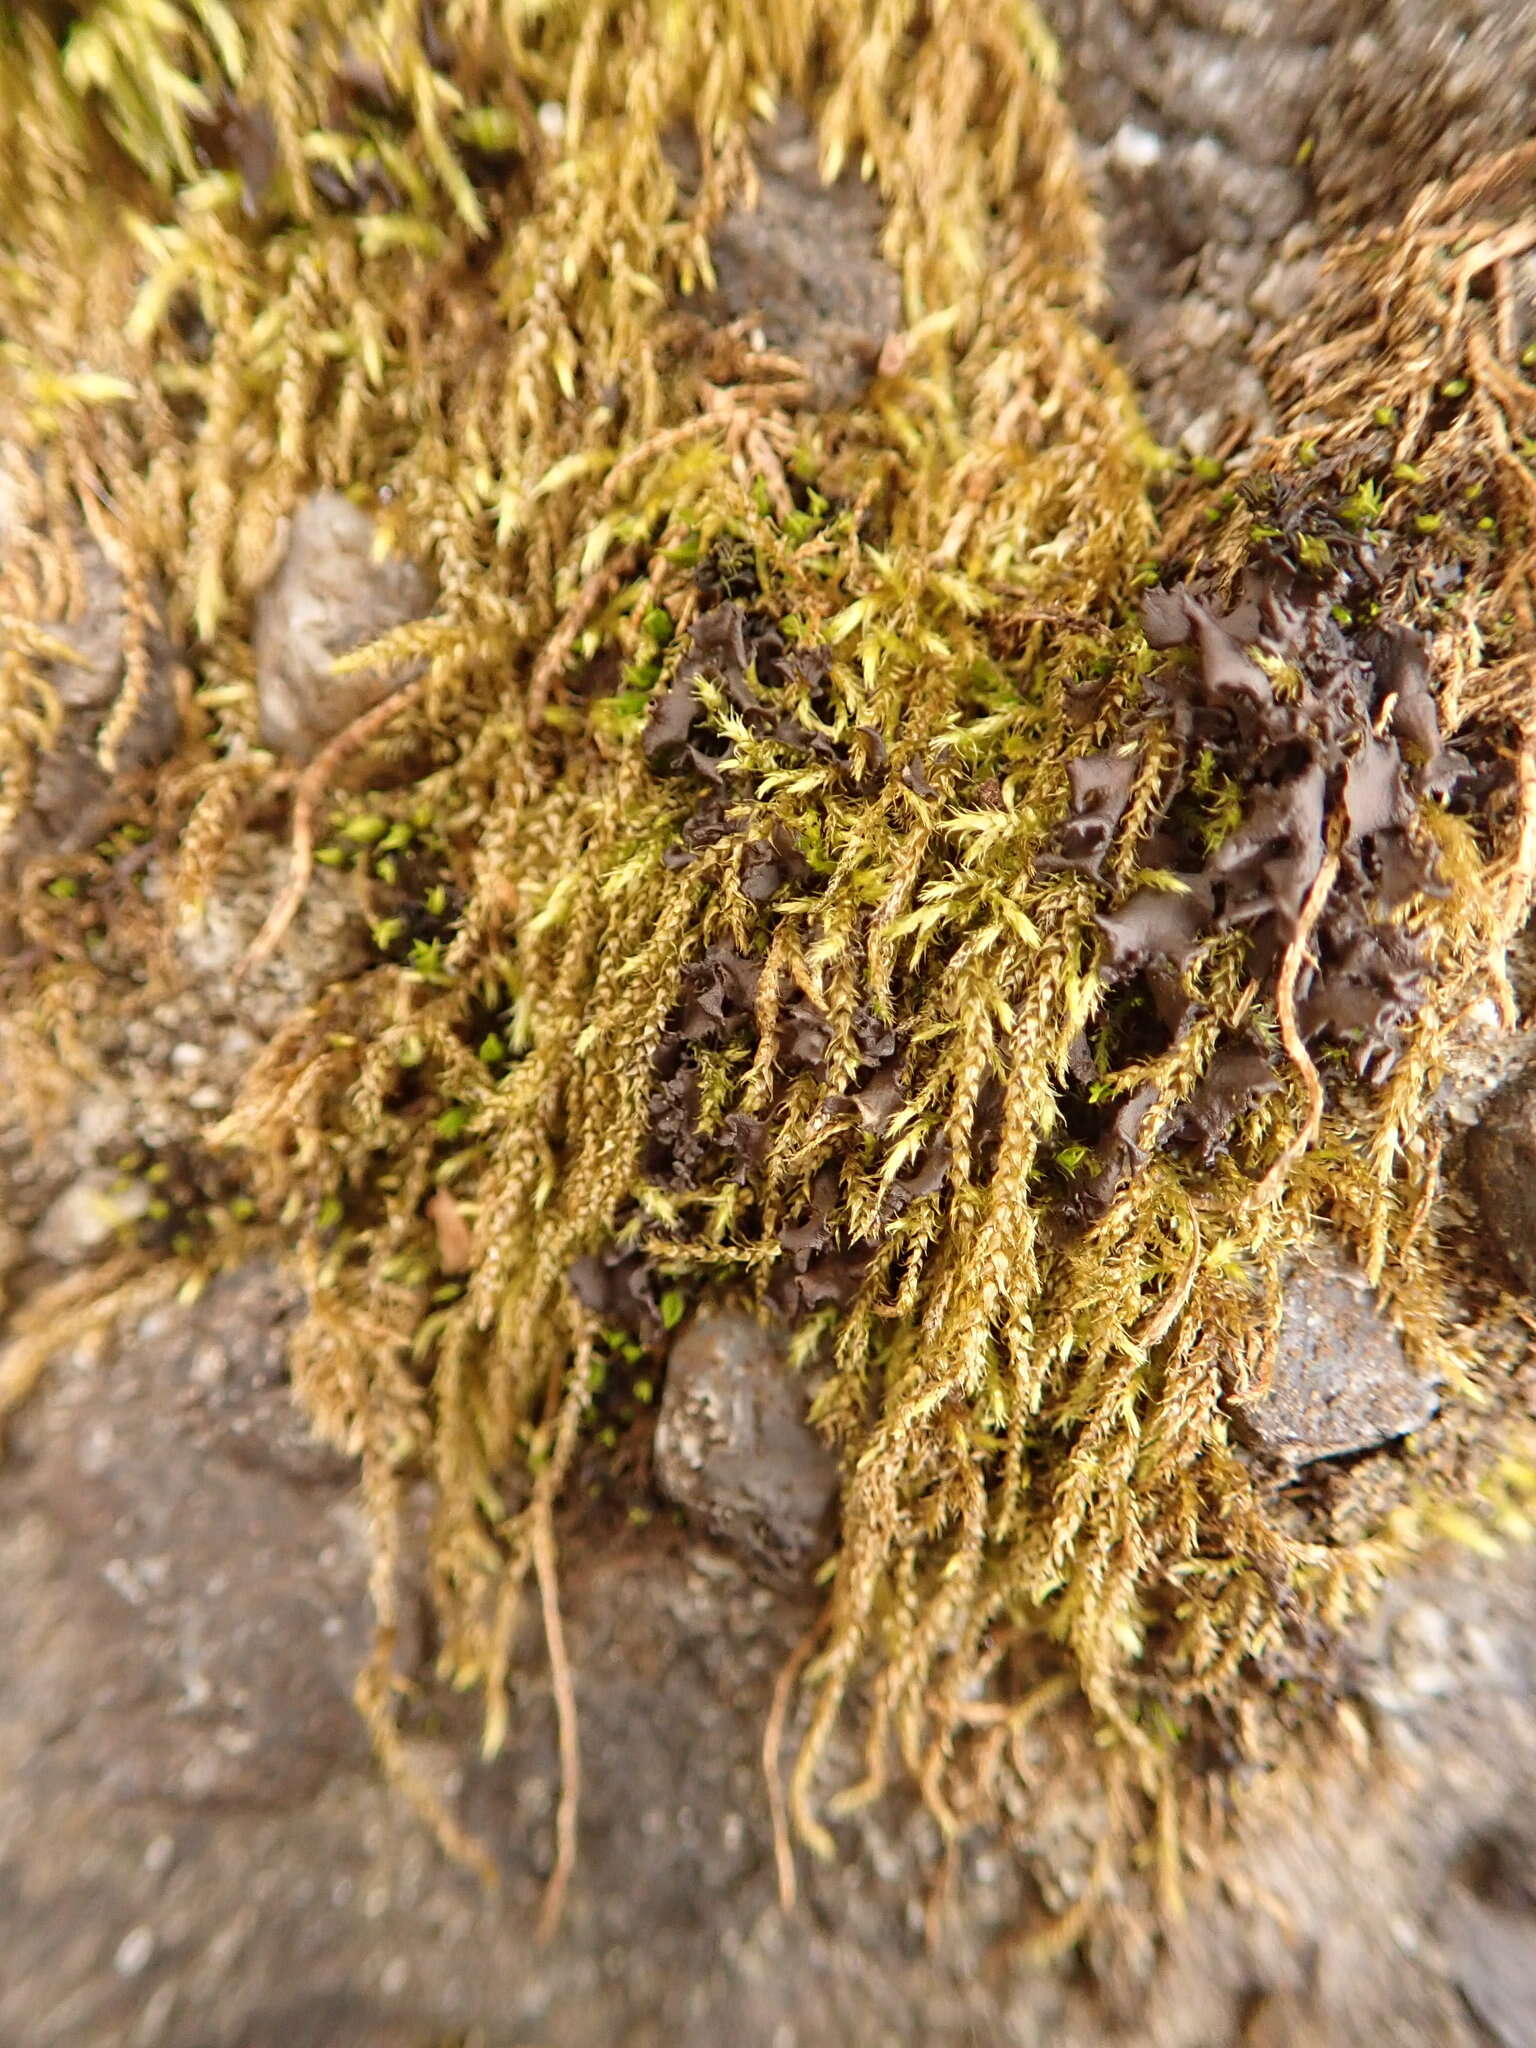 Image of Macoun's heterocladium moss